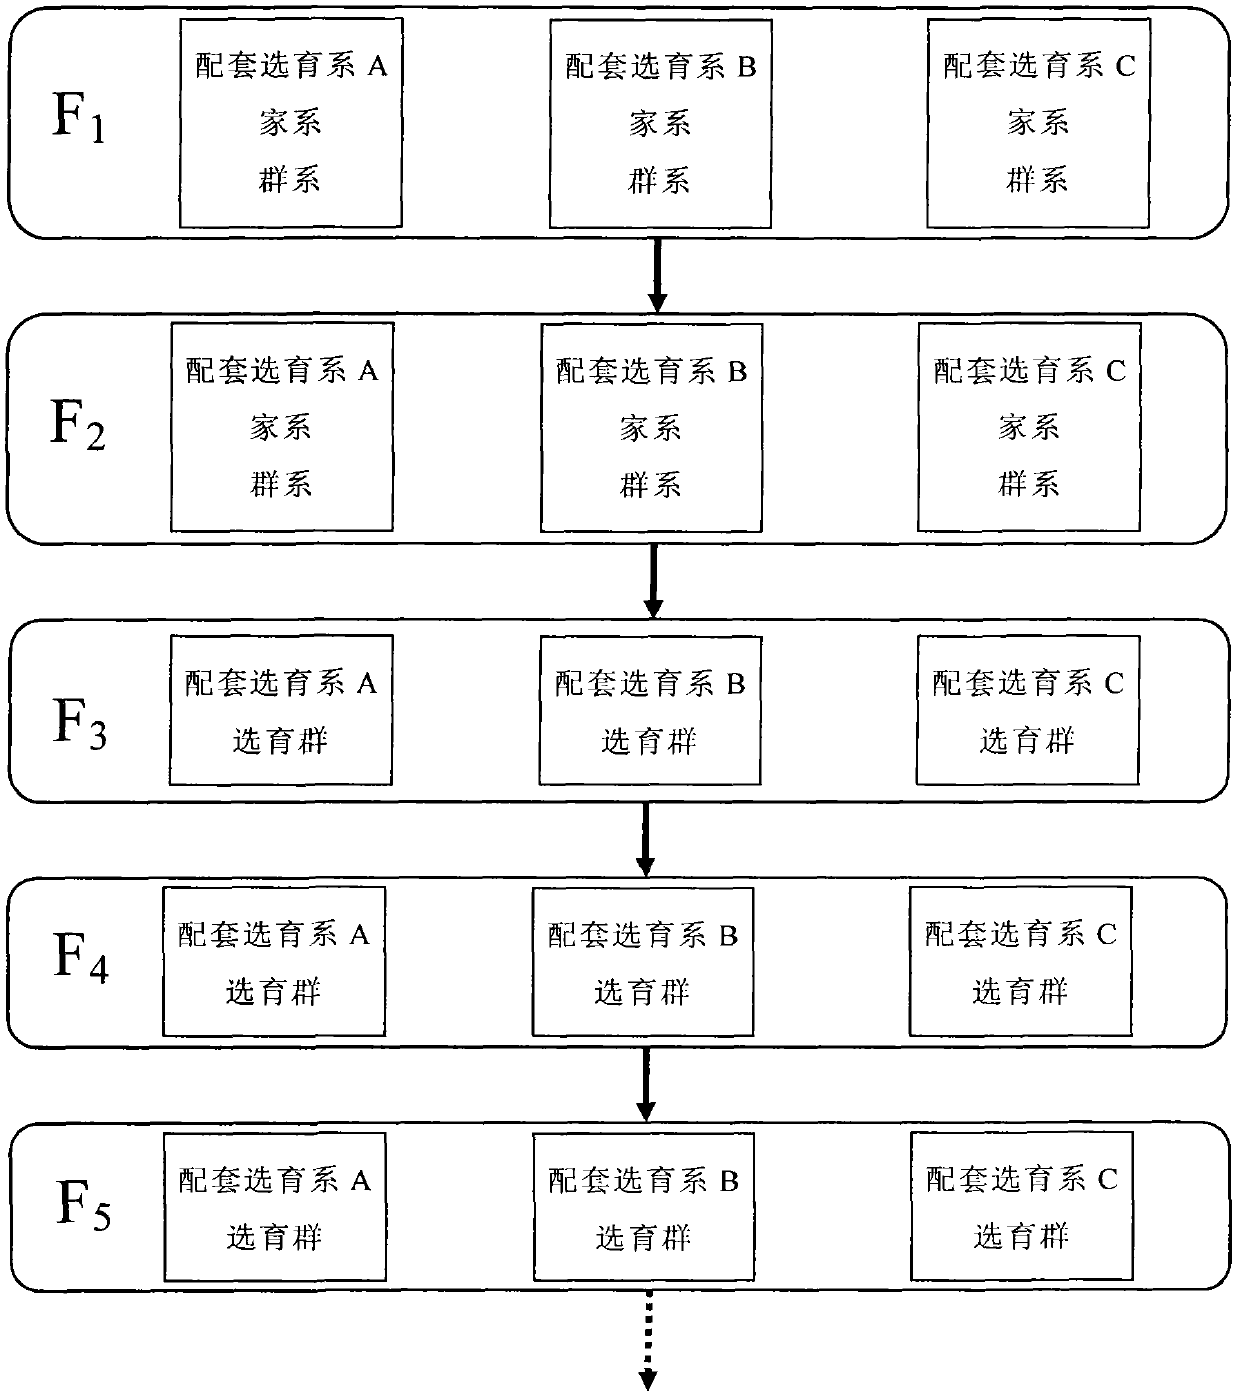 Method for establishing and breeding three matched breeding systems of Eriocheir sinensis